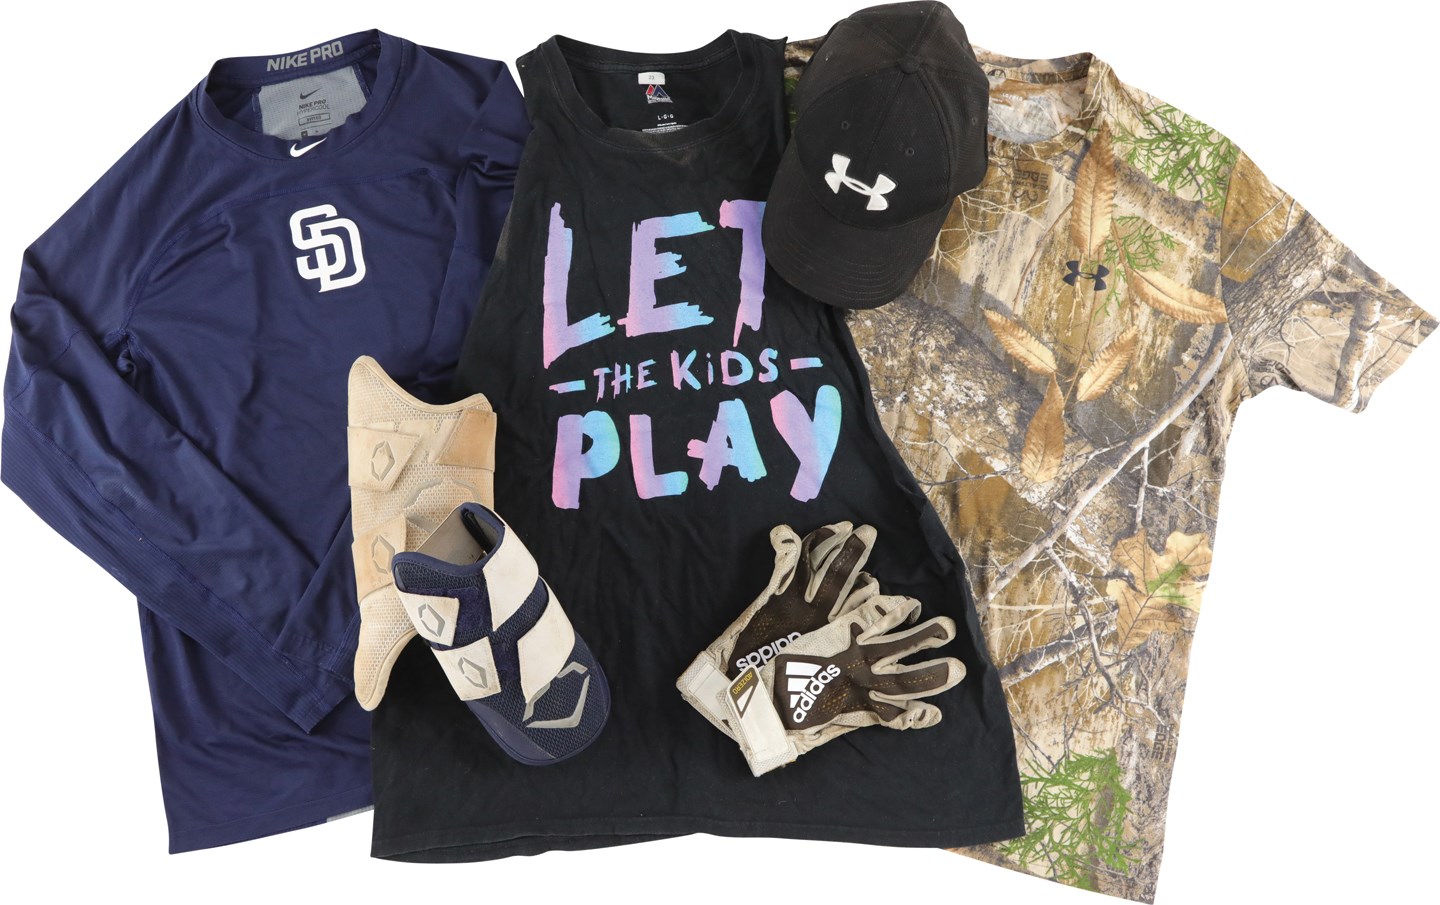 Baseball Equipment - Fernando Tatis San Diego Padres Game Worn Collection w/Batting Gloves (7)